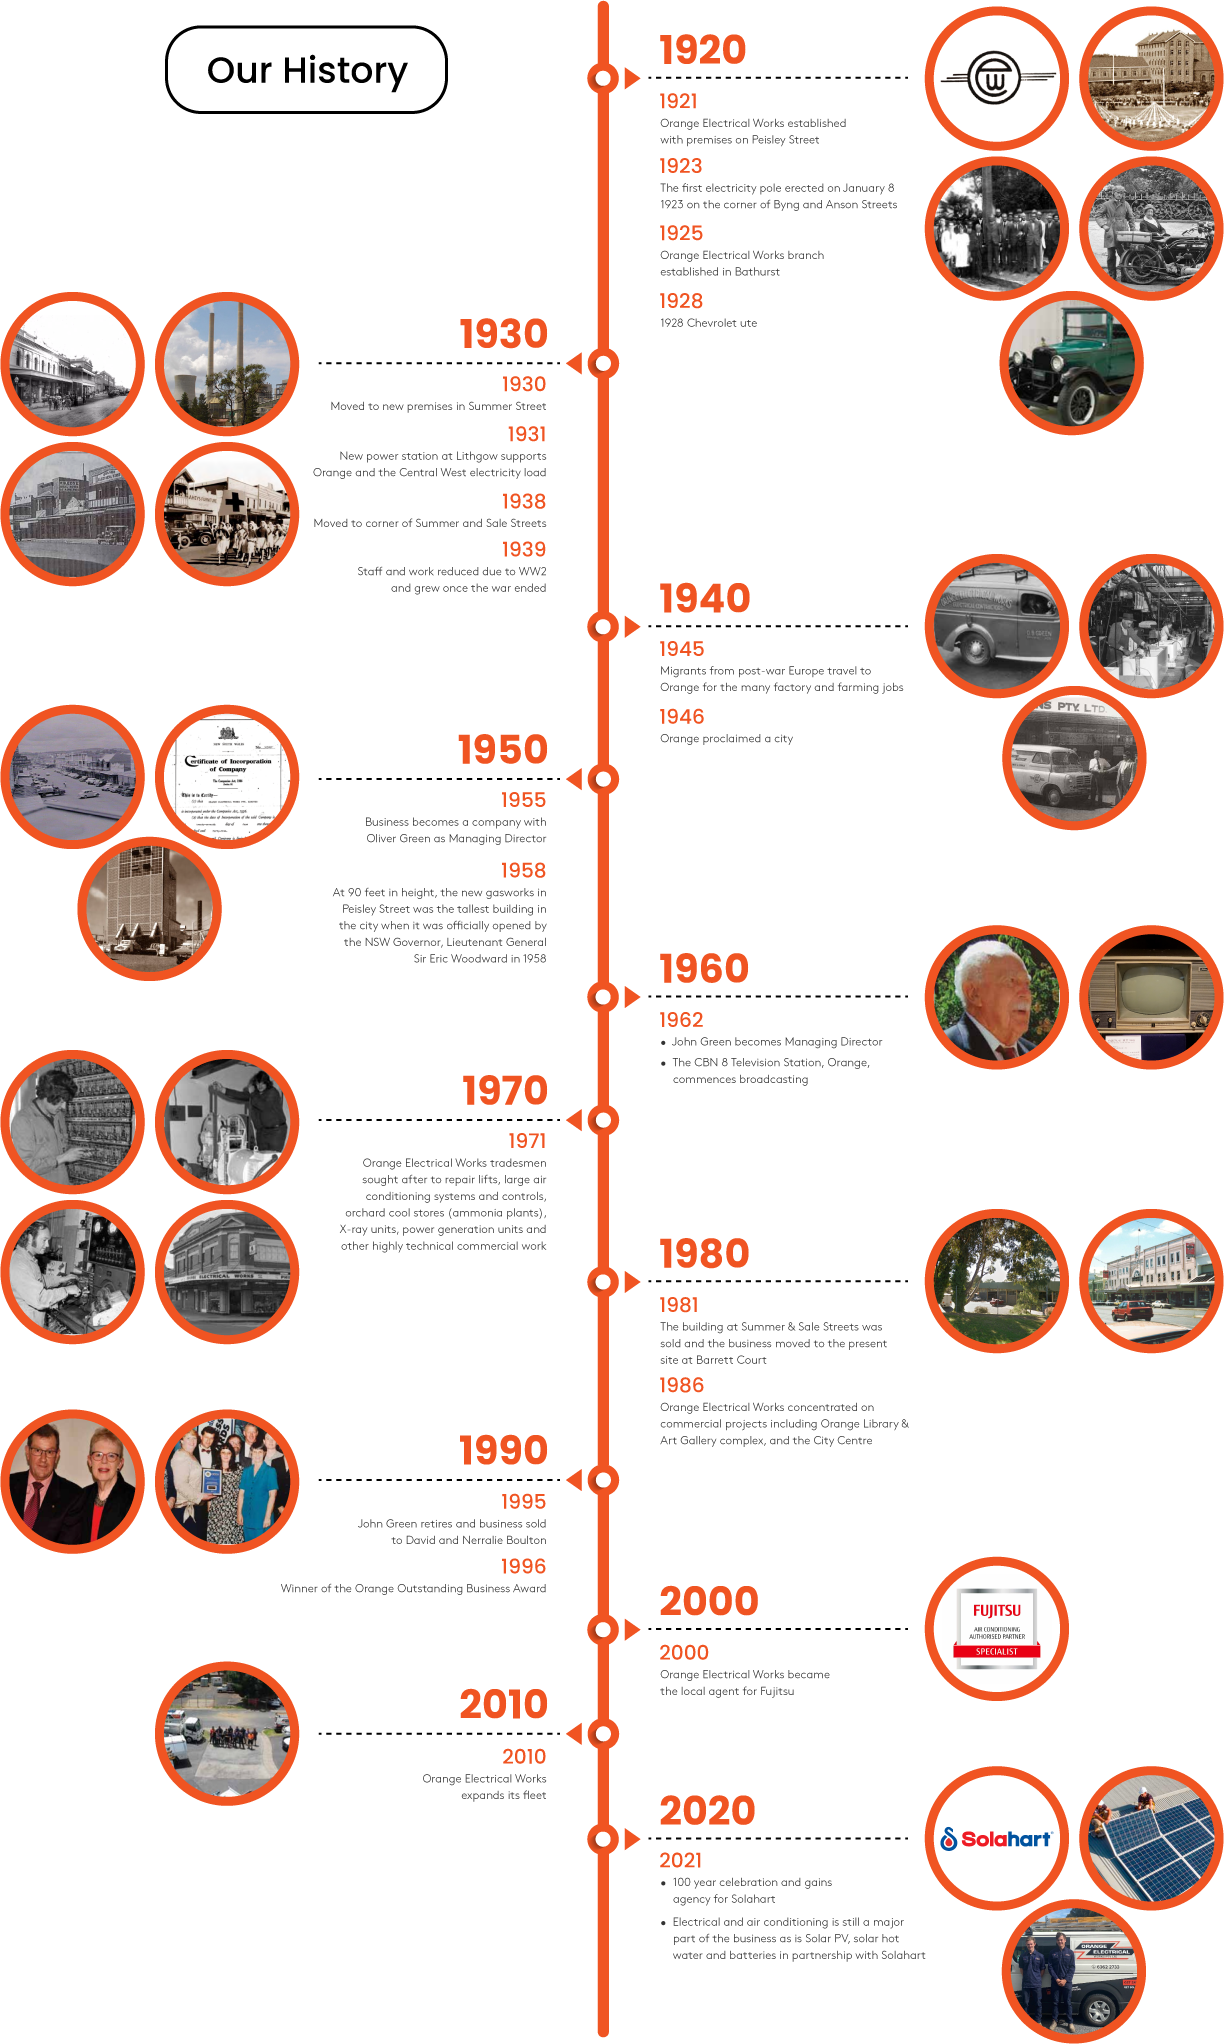 History of Orange Electrical Works